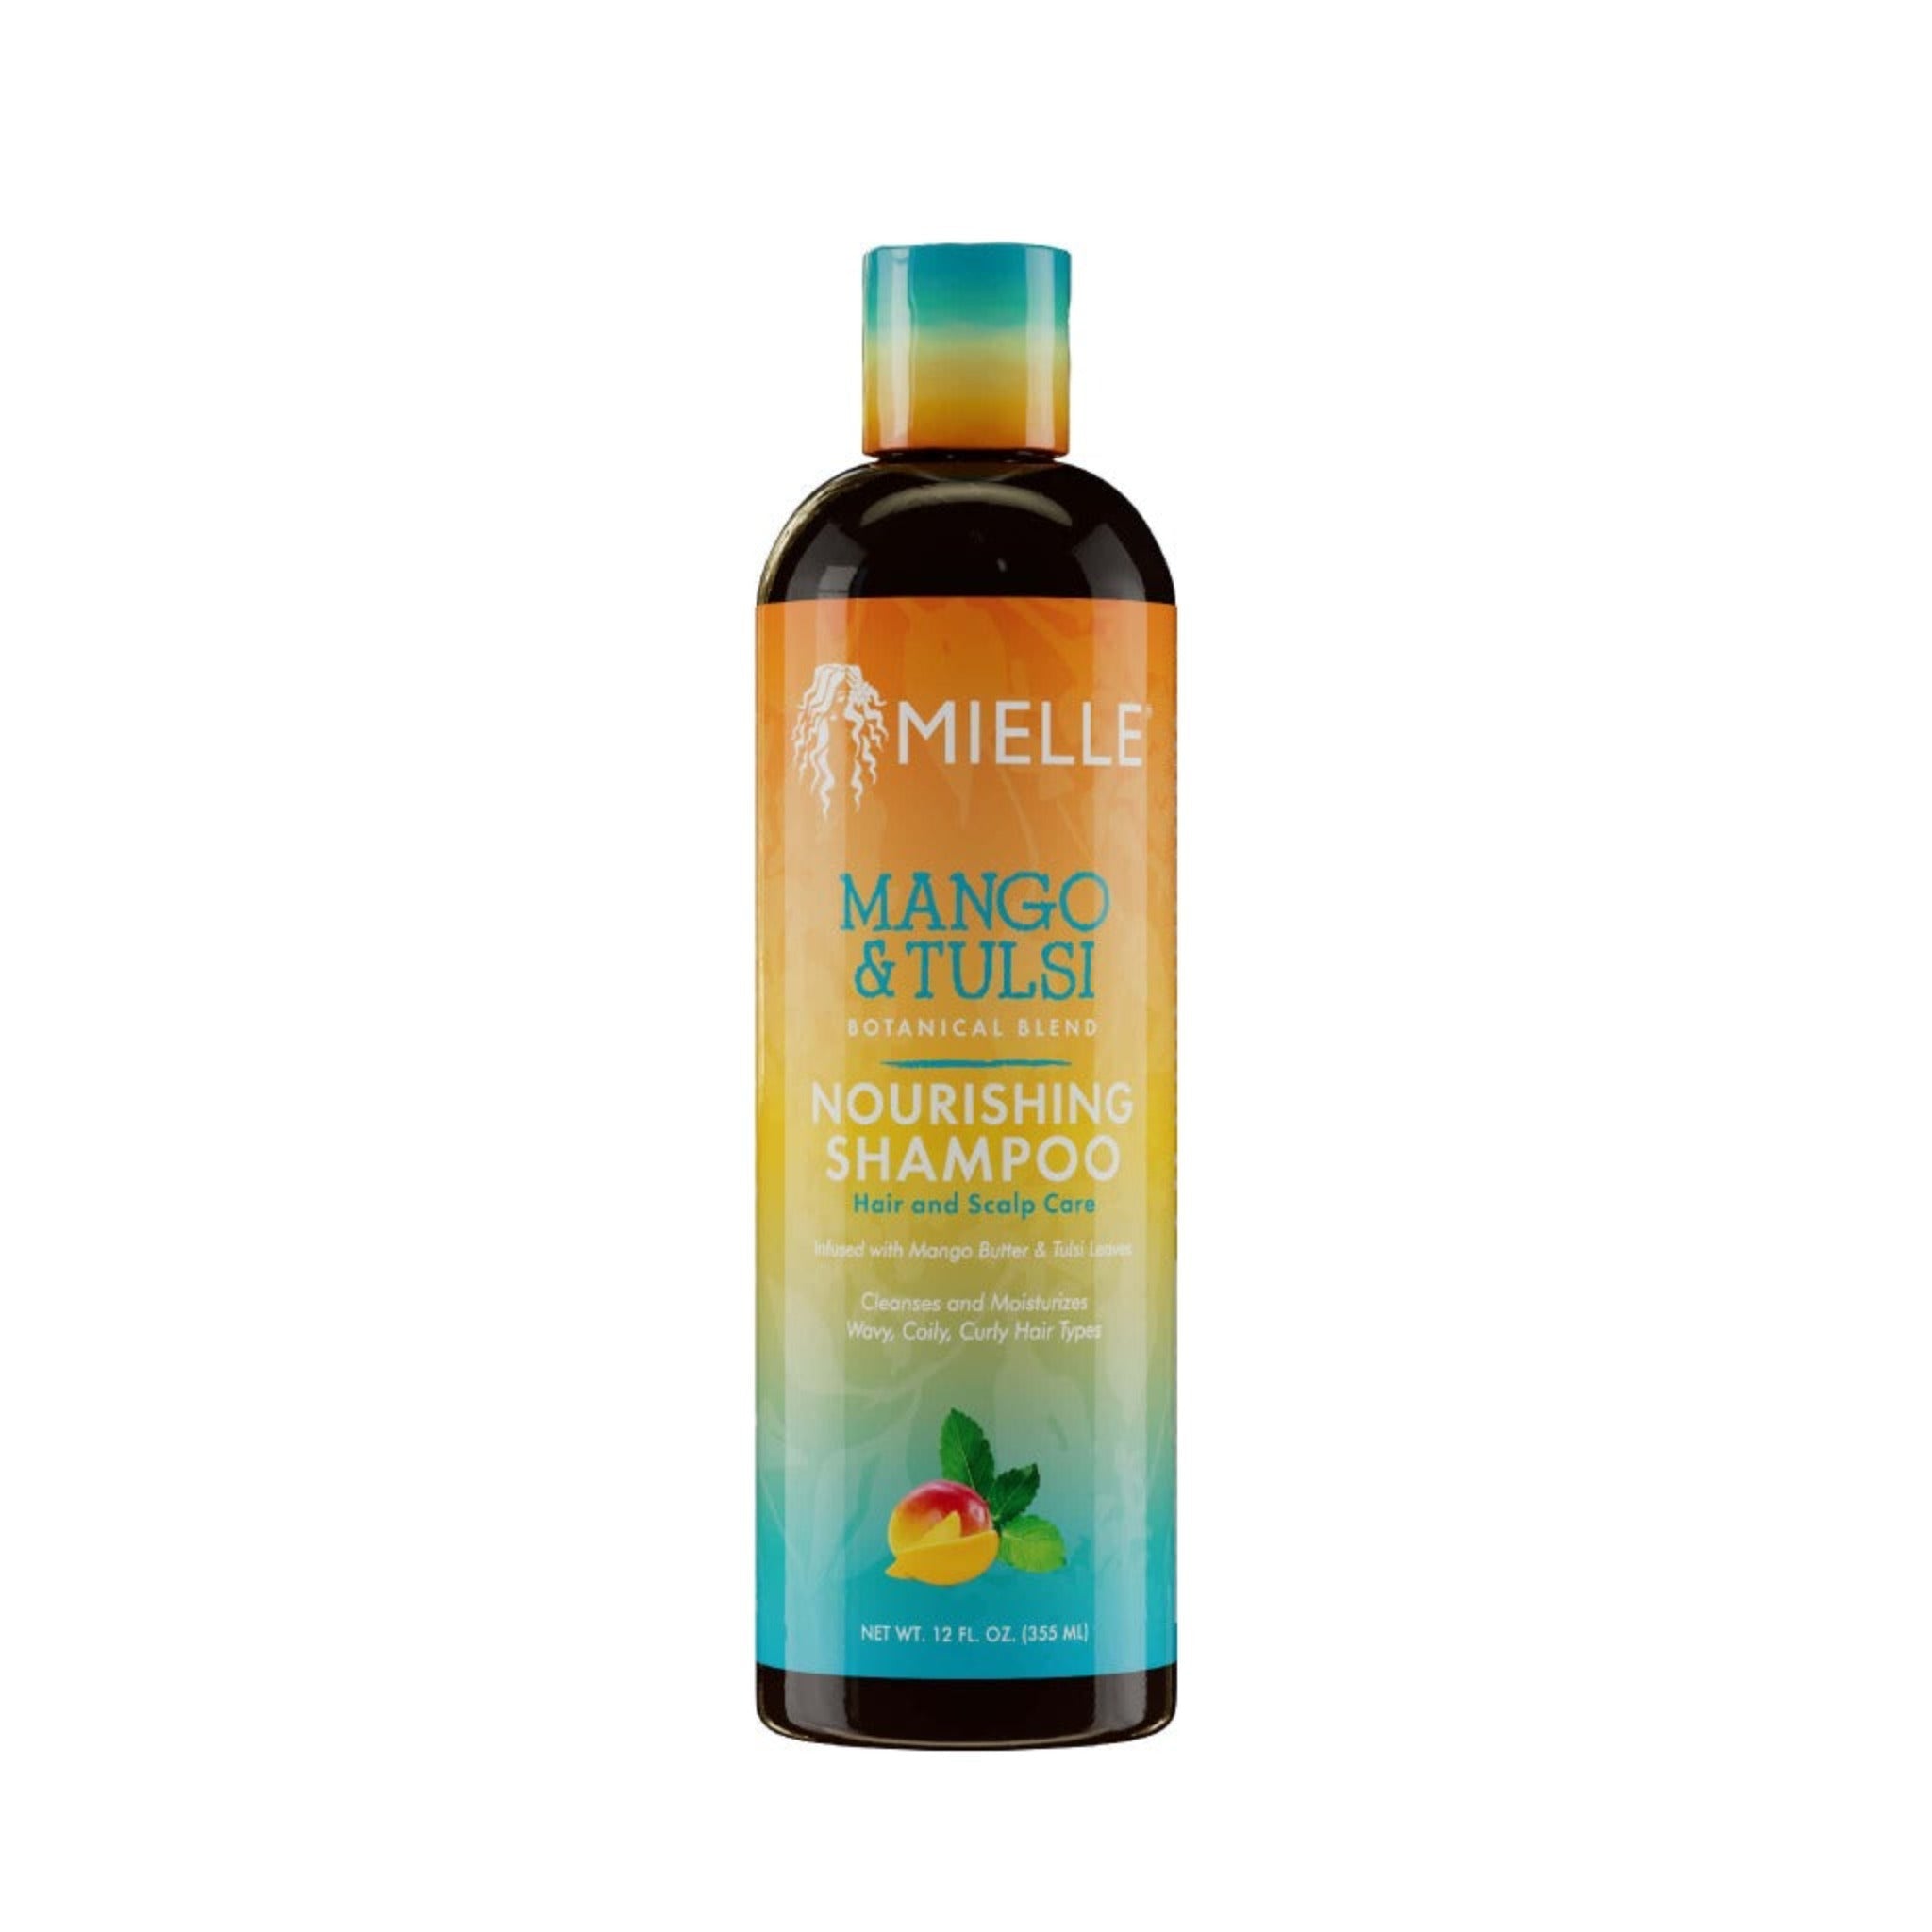 Mielle Mango & Tulsi Nourishing Shampoo